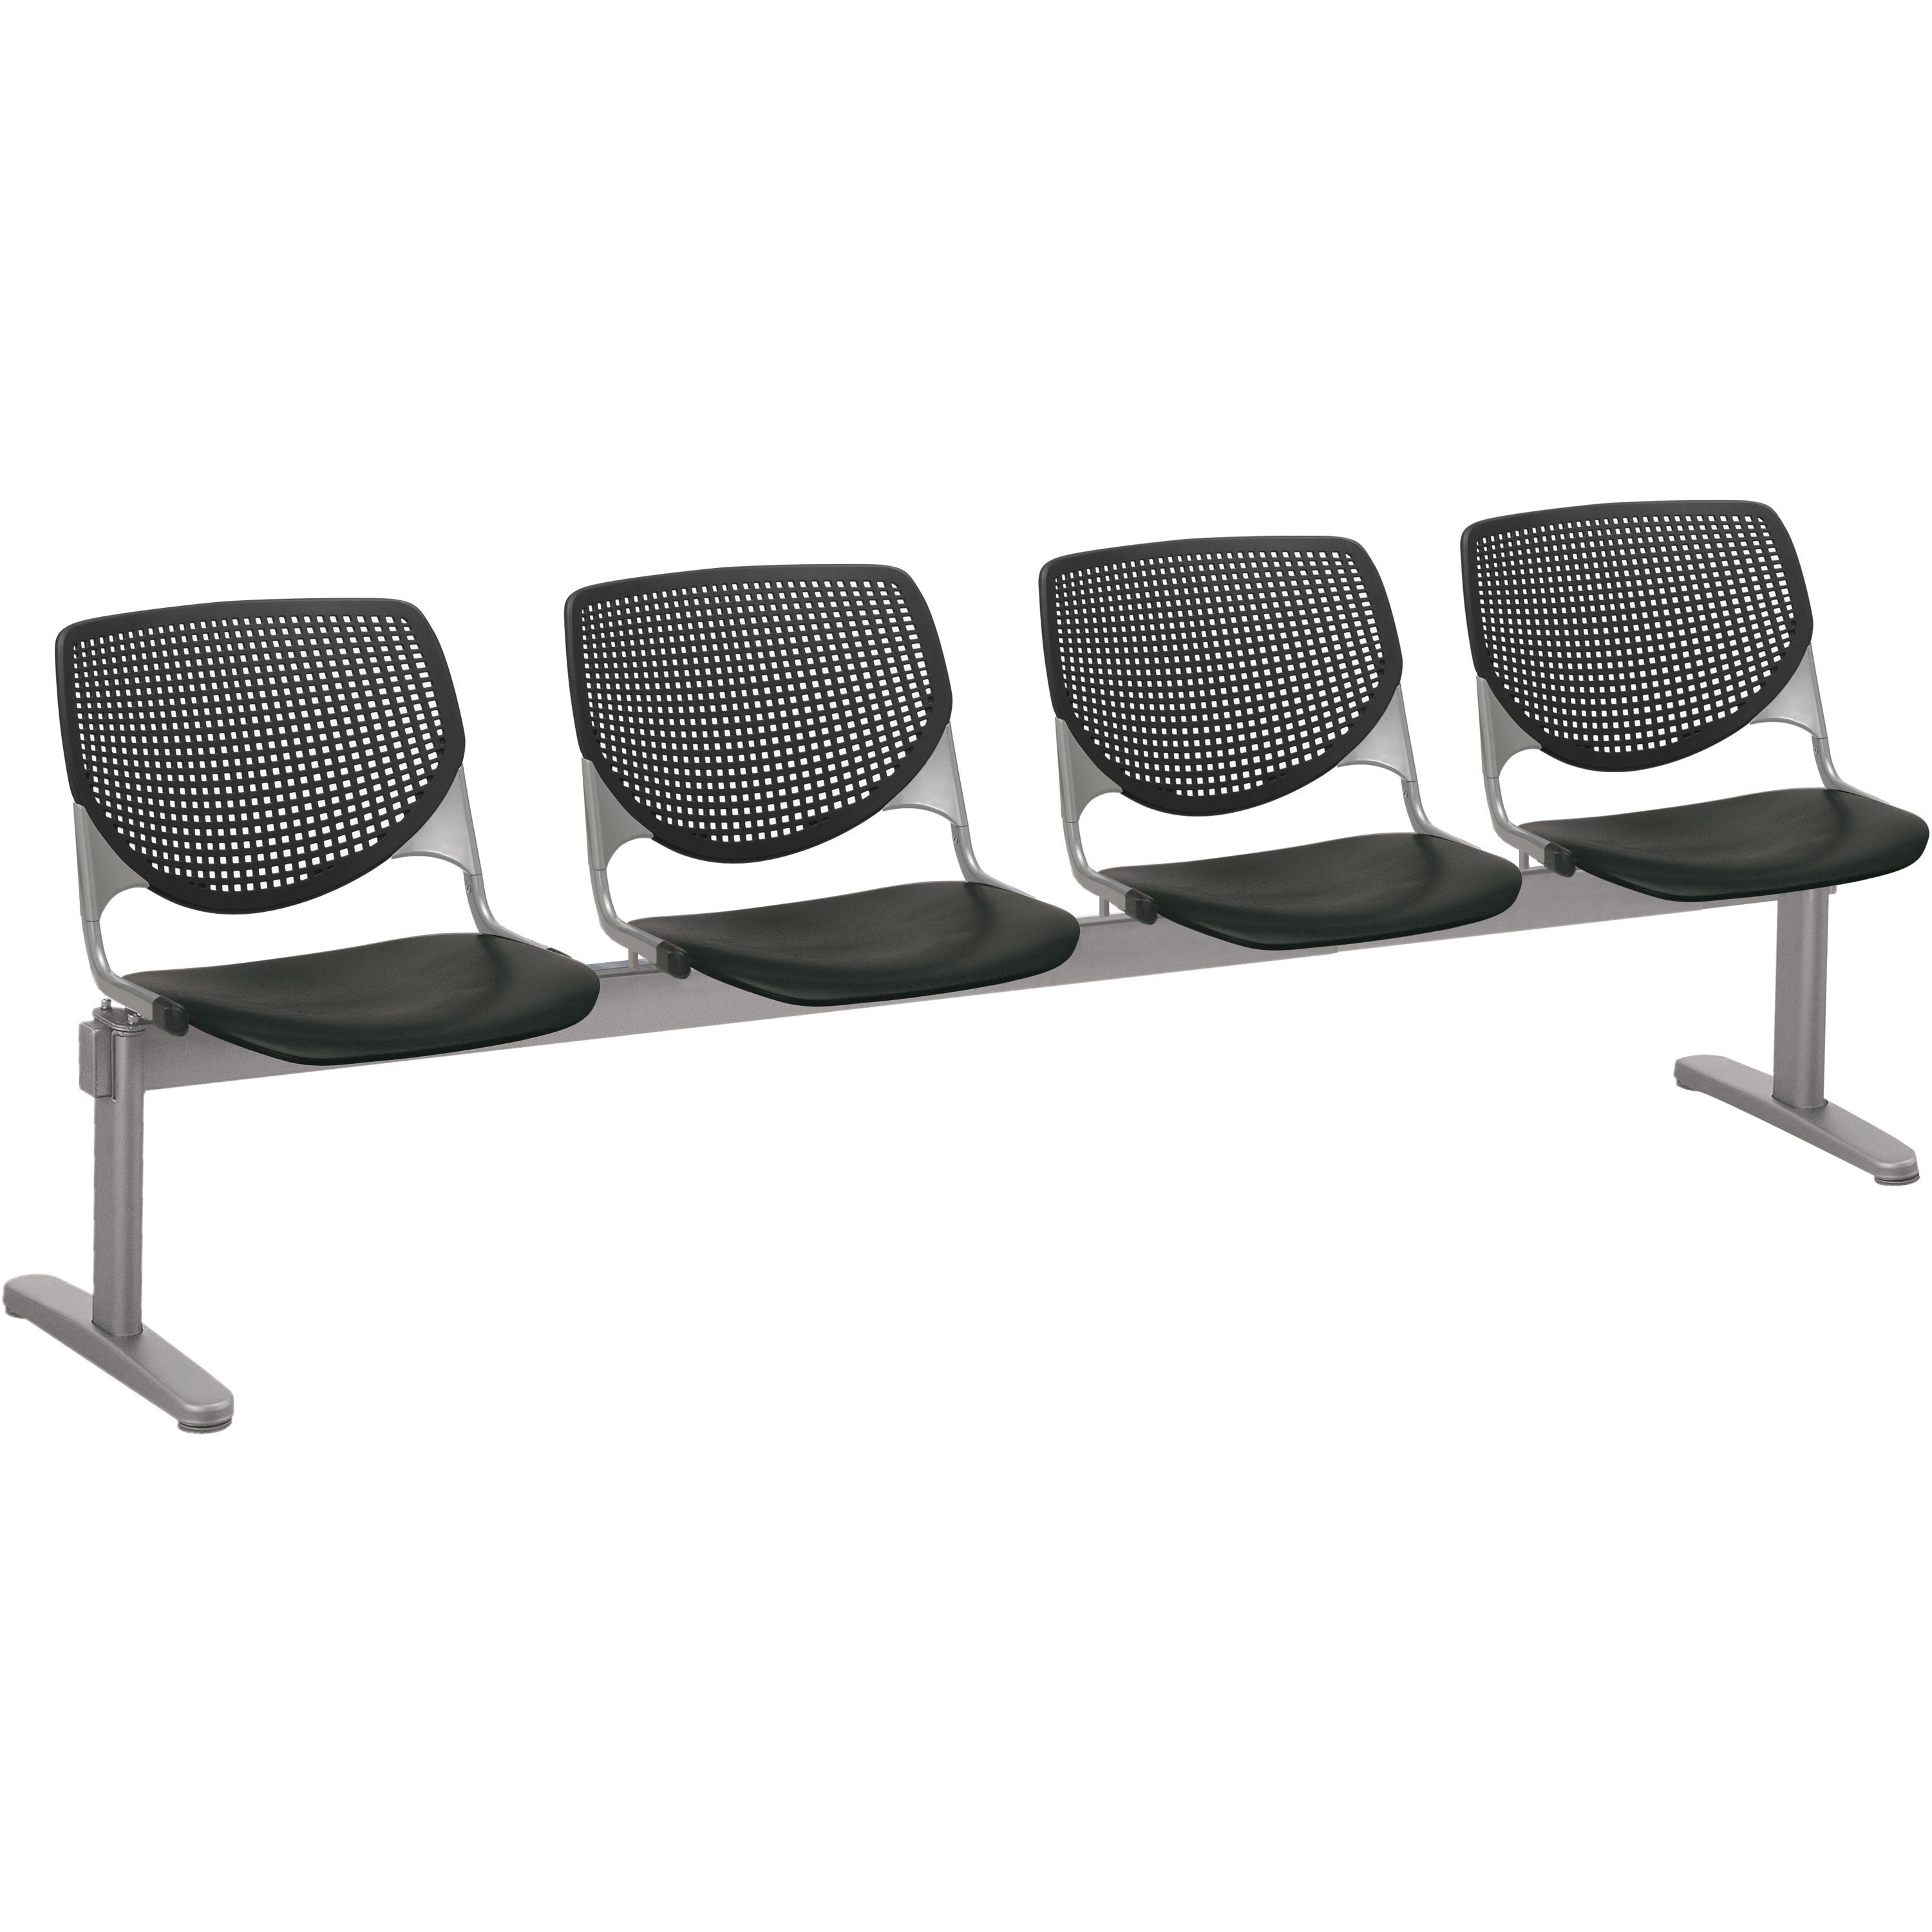 kfi-kool-4-seat-beam-chair-black-polypropylene-seat-black-polypropylene-aluminum-alloy-back-powder-coated-silver-tubular-steel-frame-1-each_kfi2300beam4p10 - 1